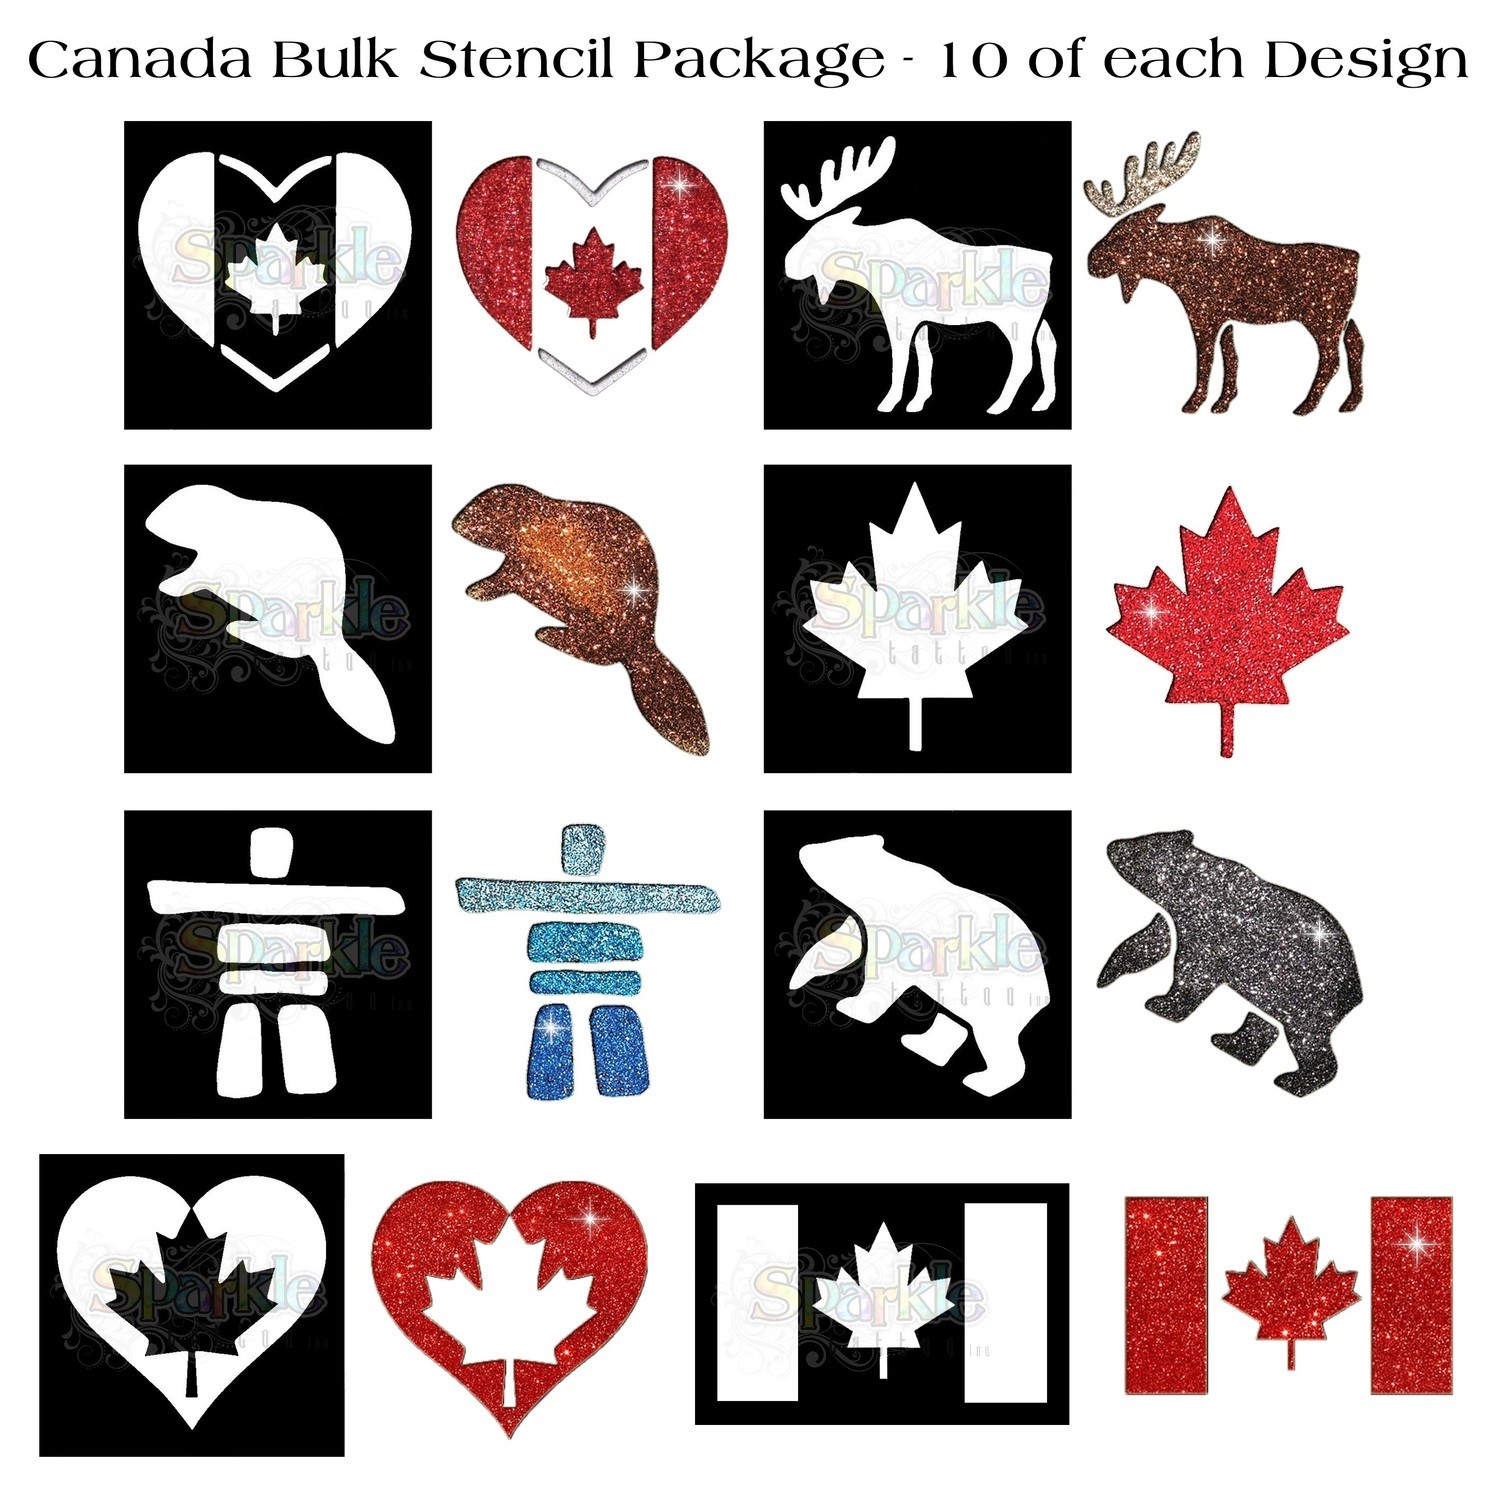 Bulk Canada Stencil Package